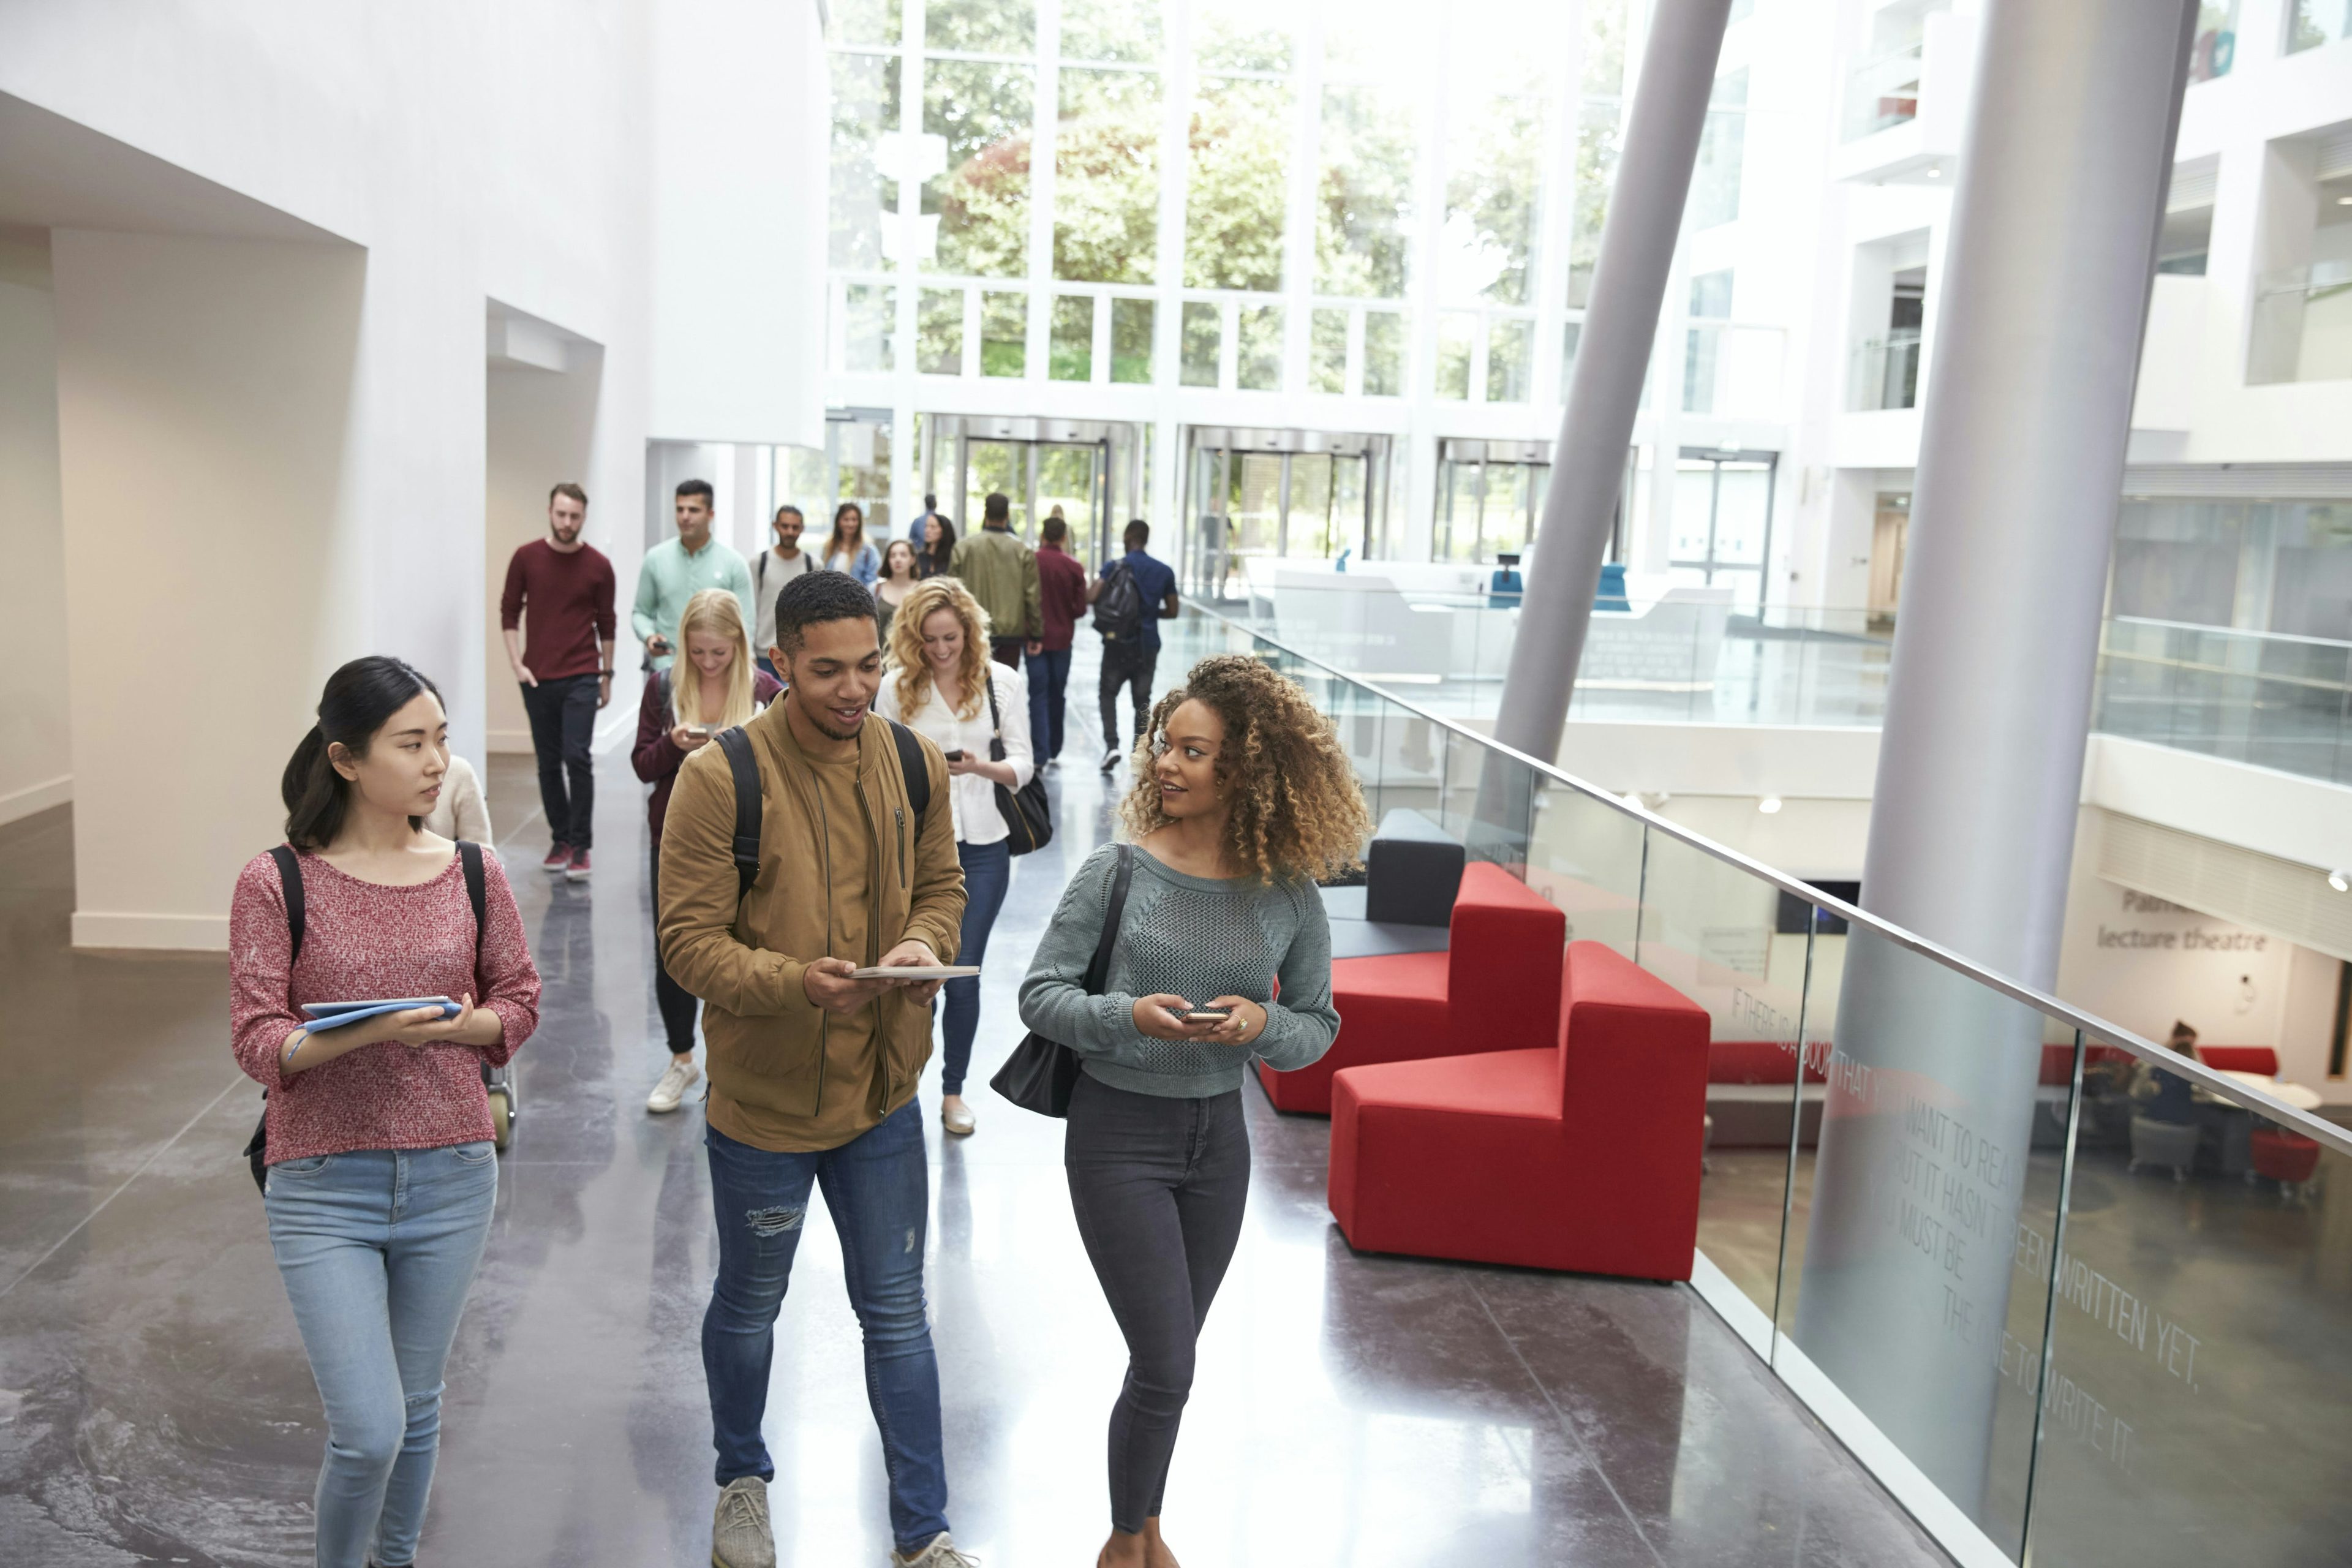 Students walking in an university hallway